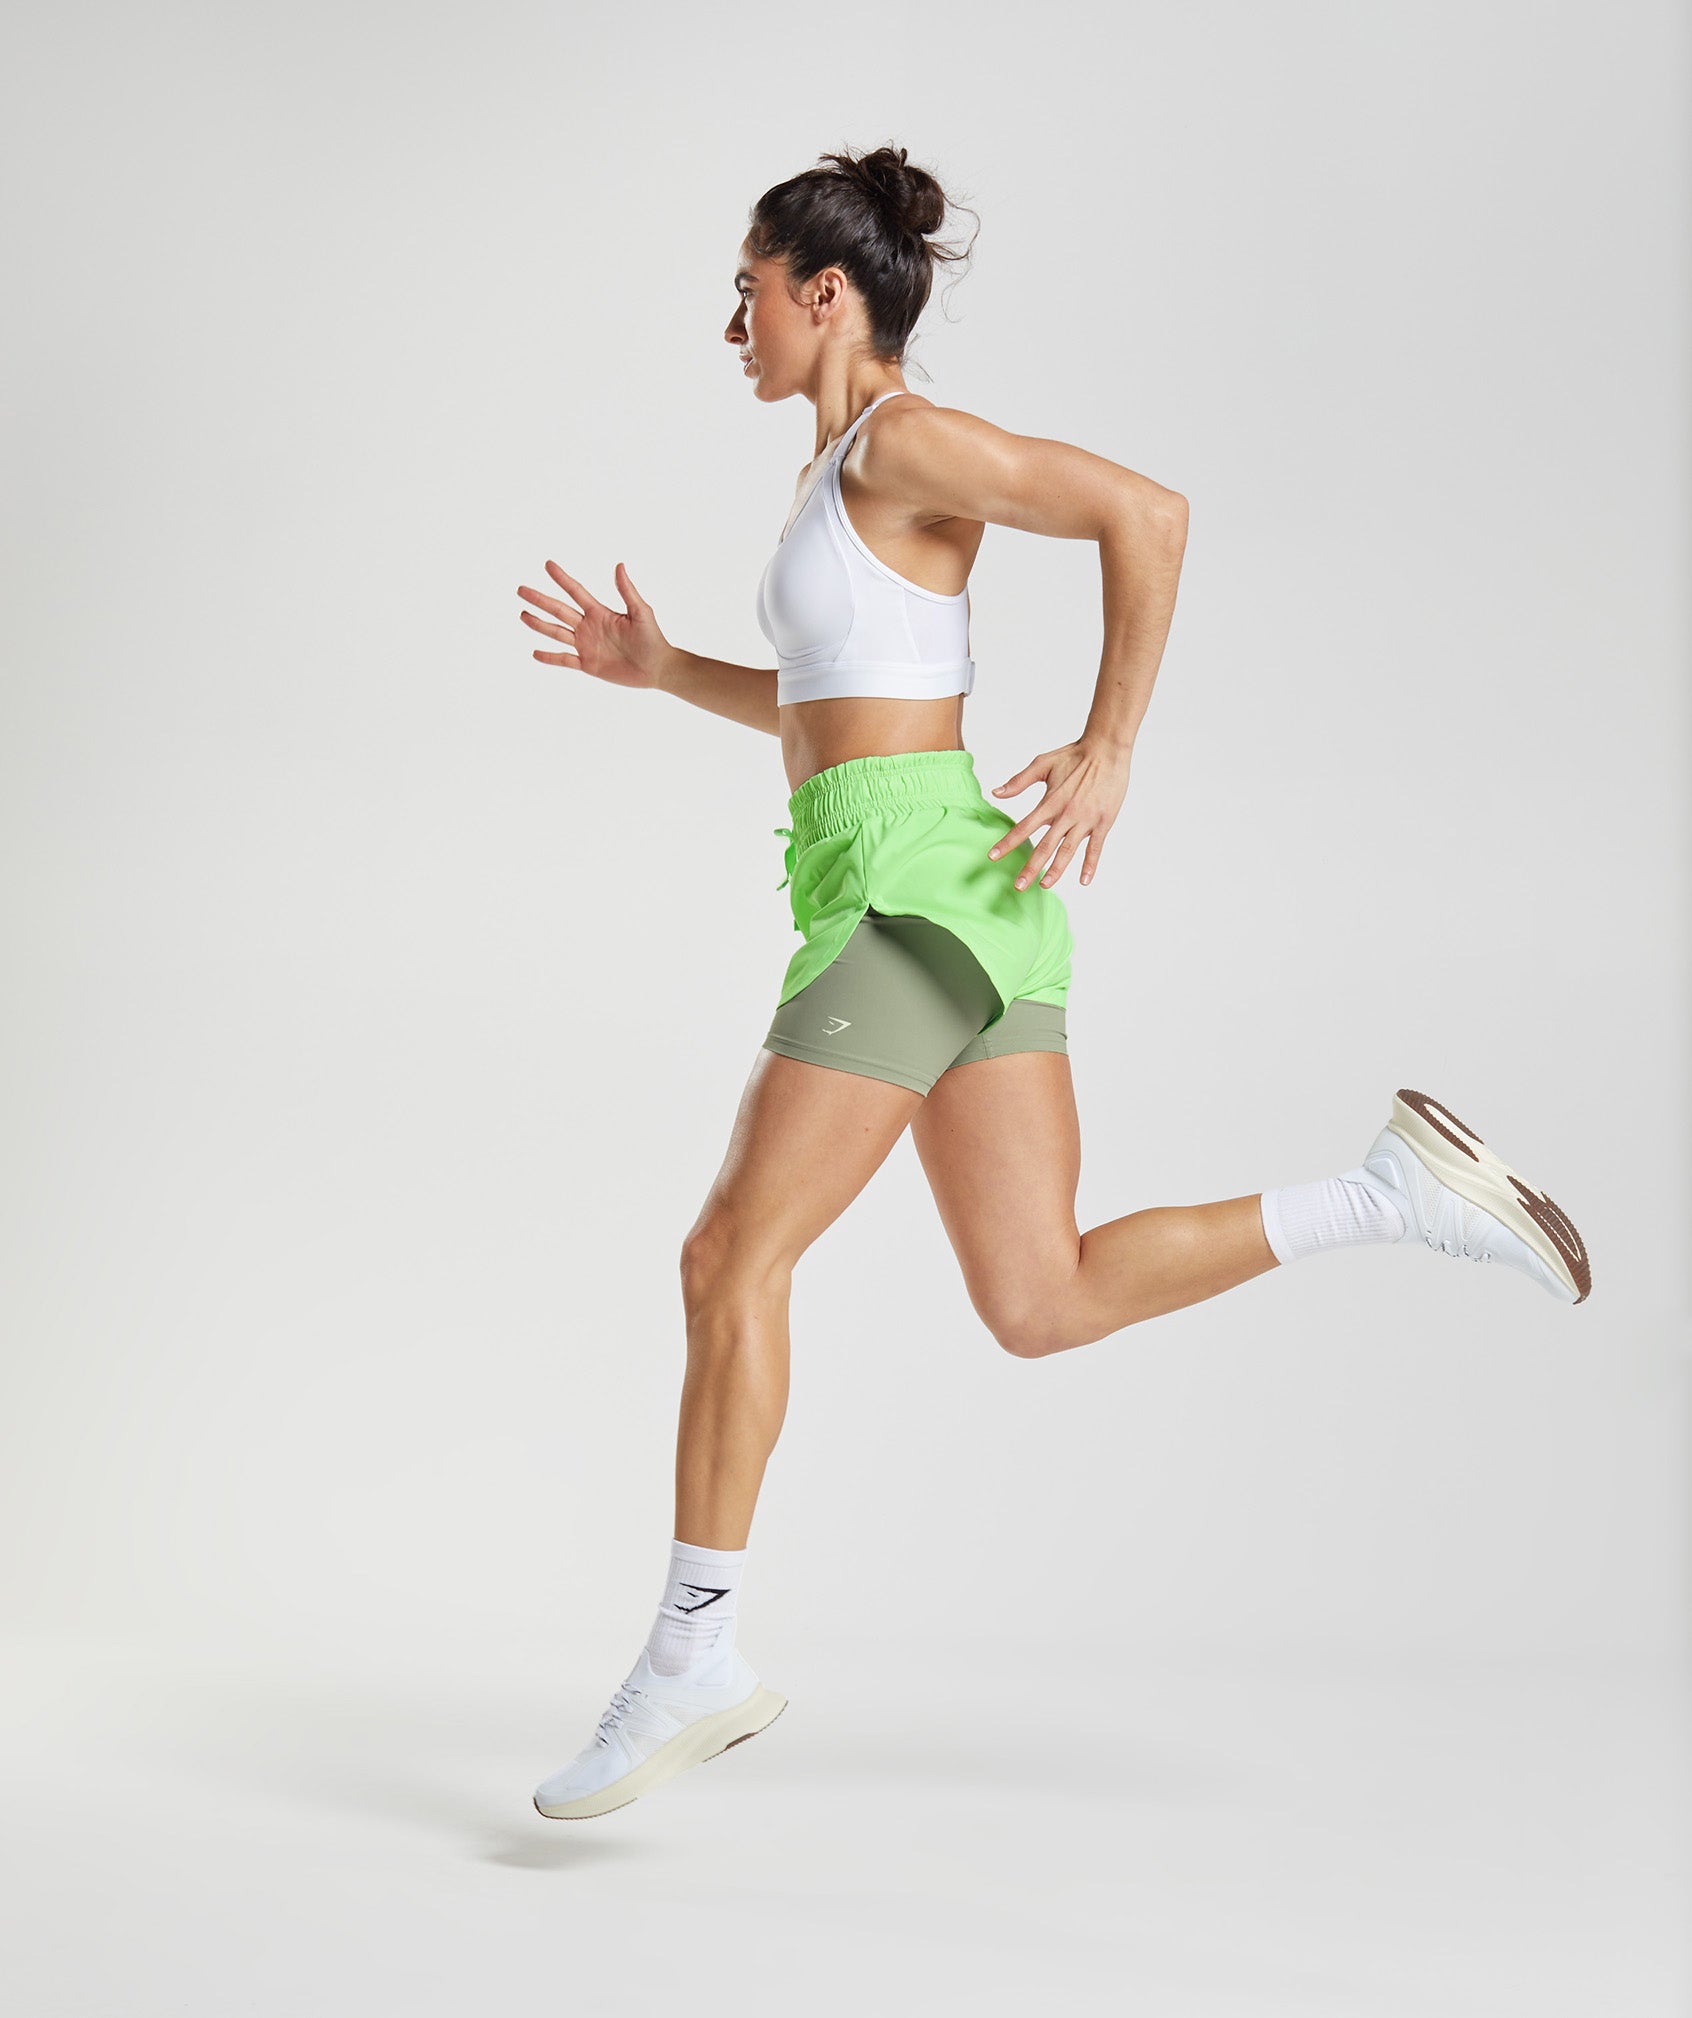 Gymshark Training Shorts - Camo Green Print